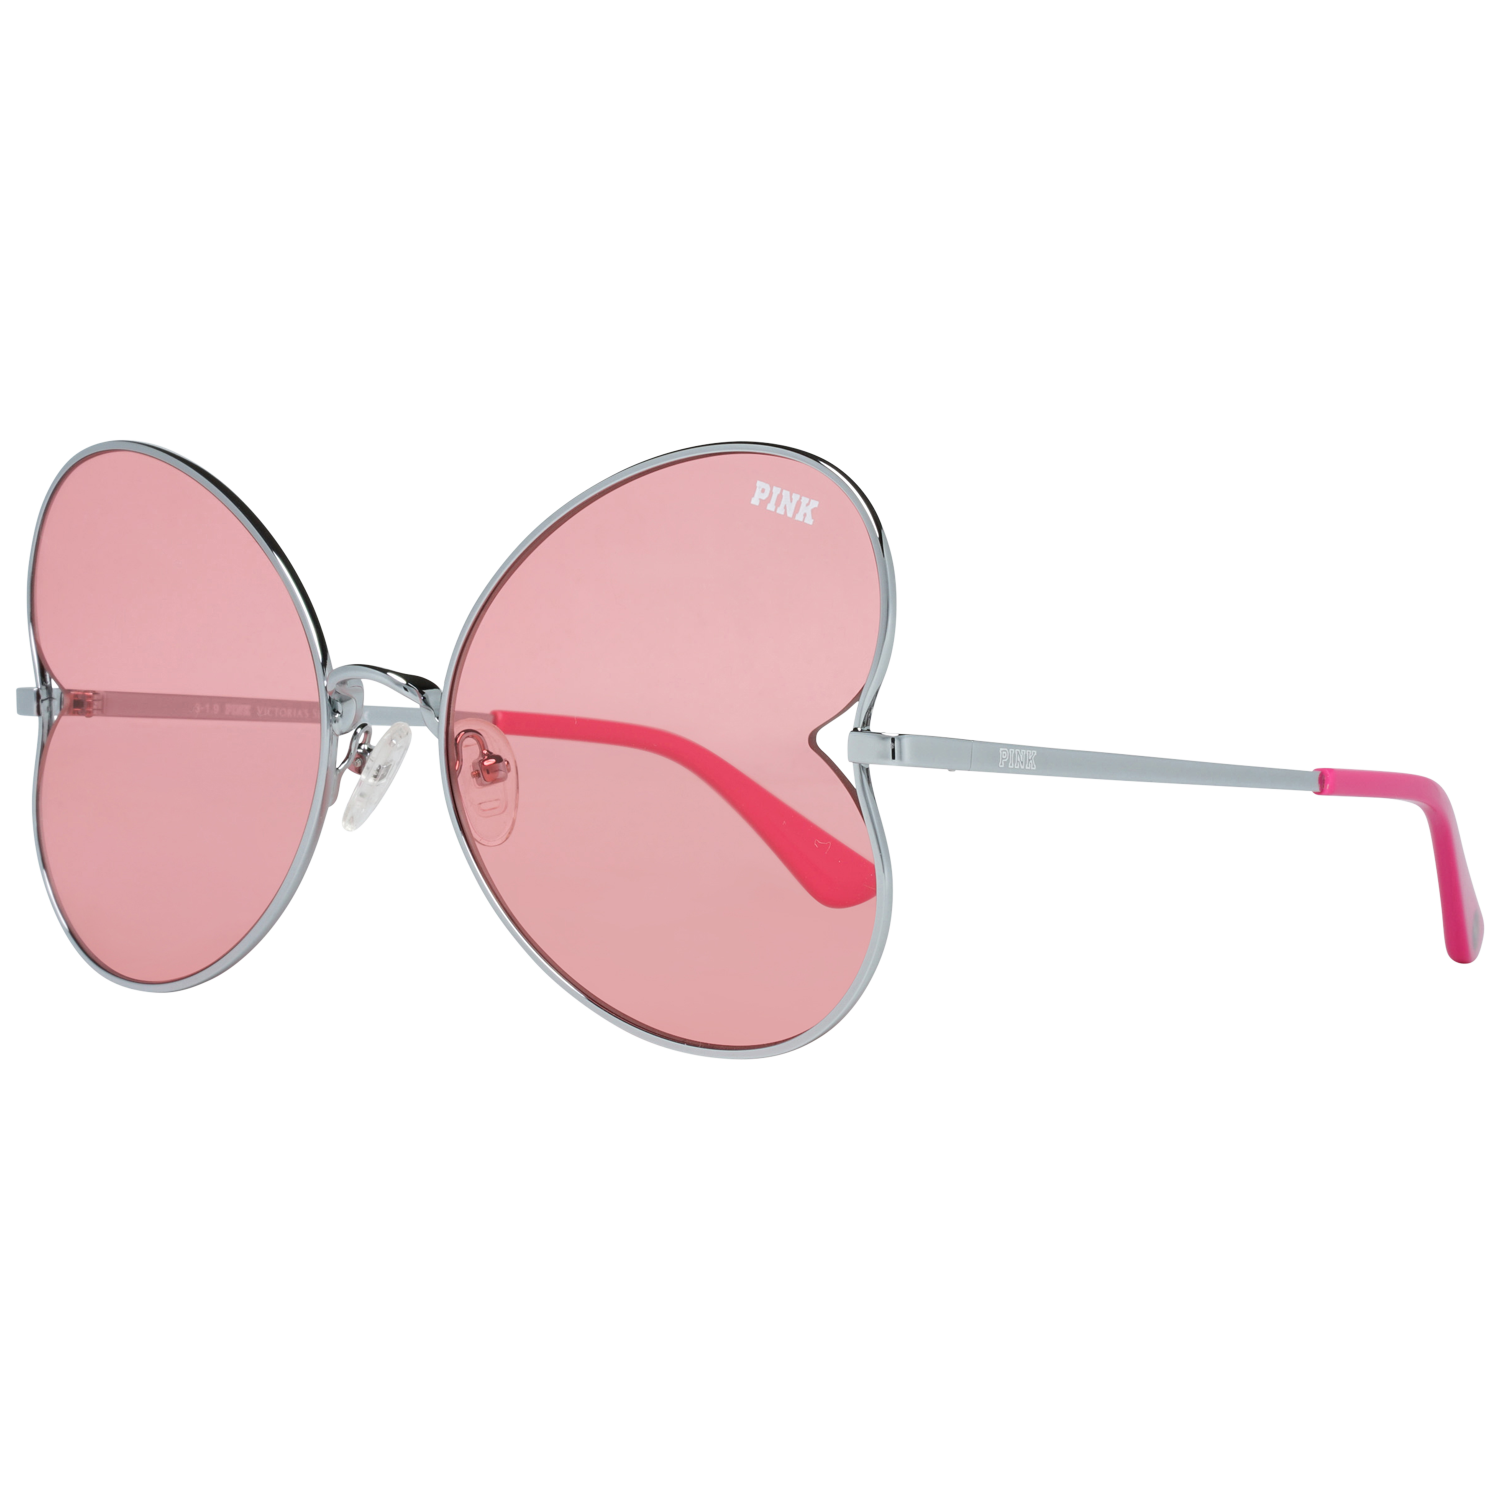 Victoria's Secret Pink Sunglasses PK0012 16T 59 Silver